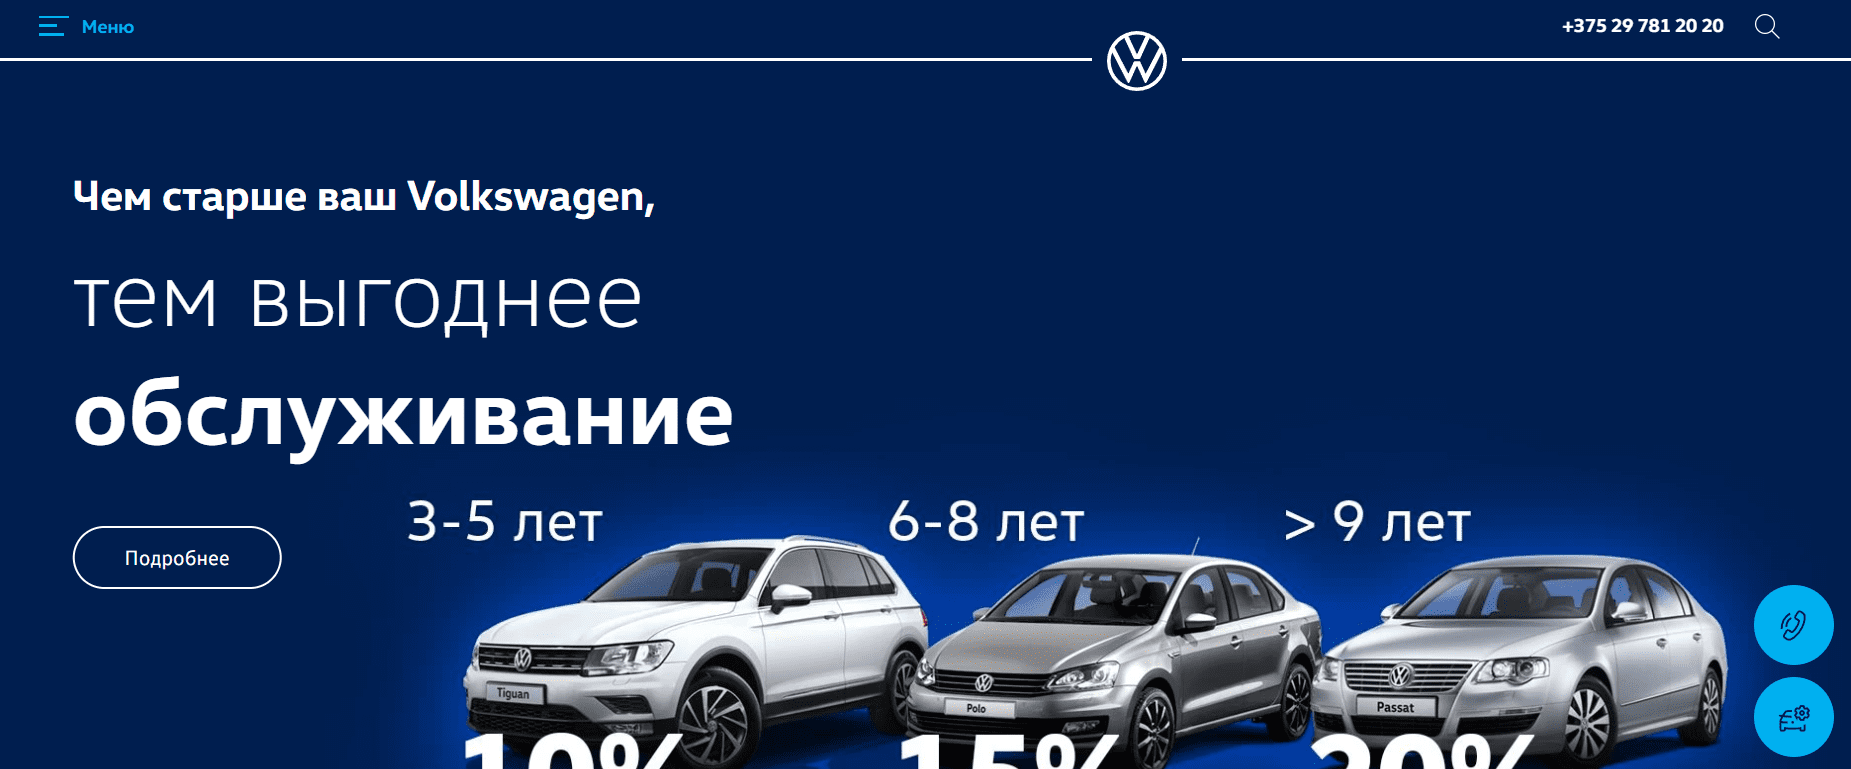 Официальный дилер Volkswagen (volkswagen.by) - официальный сайт